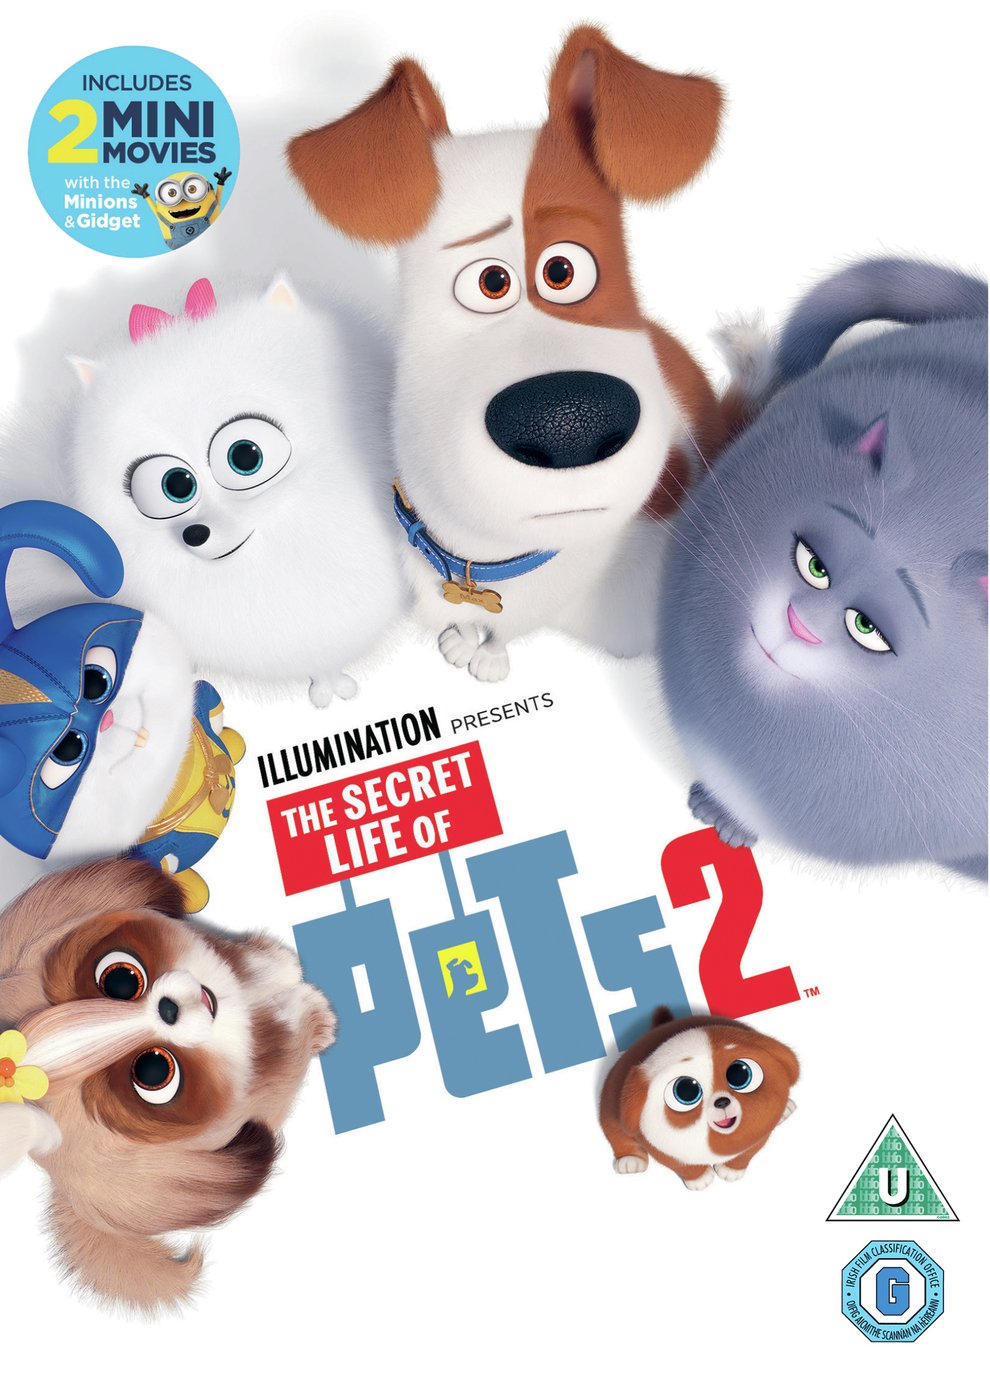 The Secret Life of Pets 2 DVD